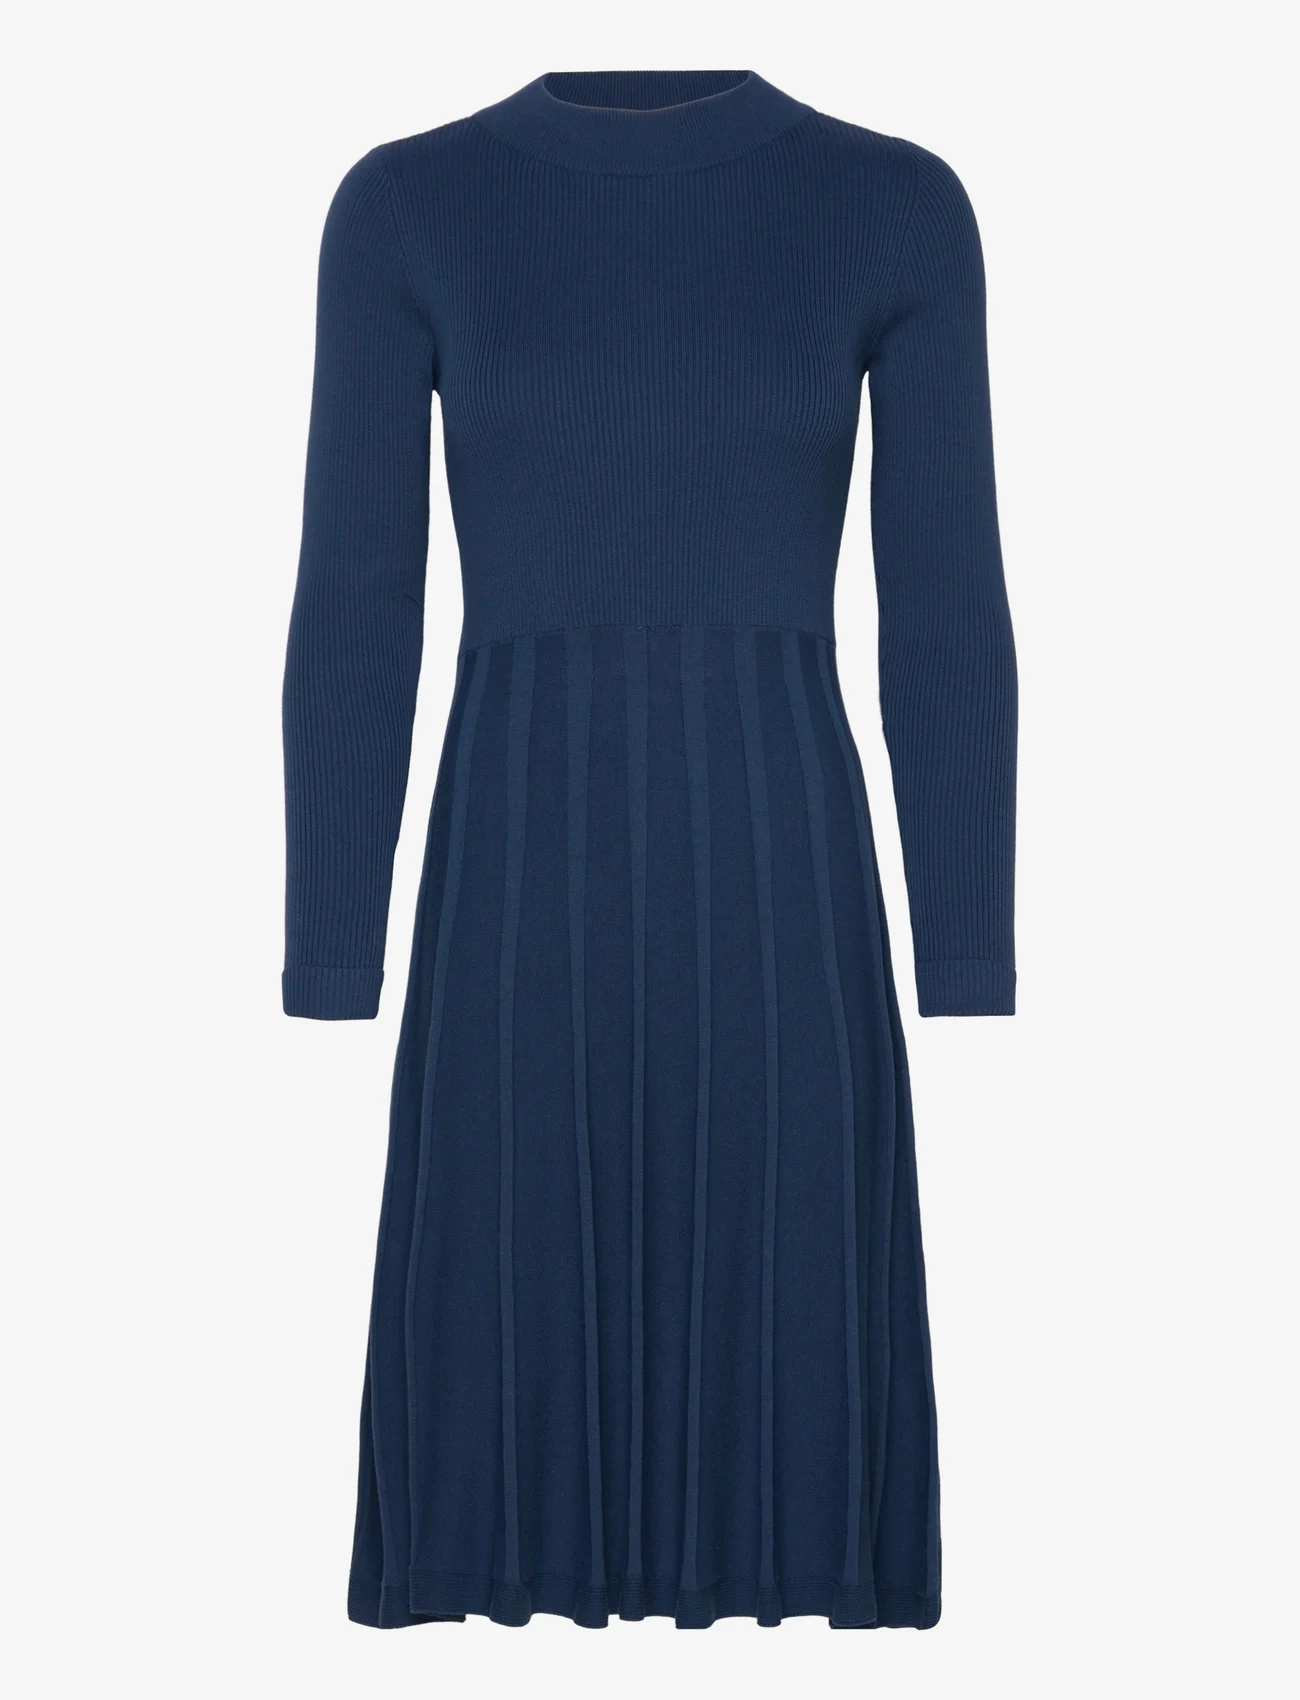 Jumperfabriken - Henna dress Dark Blue - knitted dresses - darkblue - 0